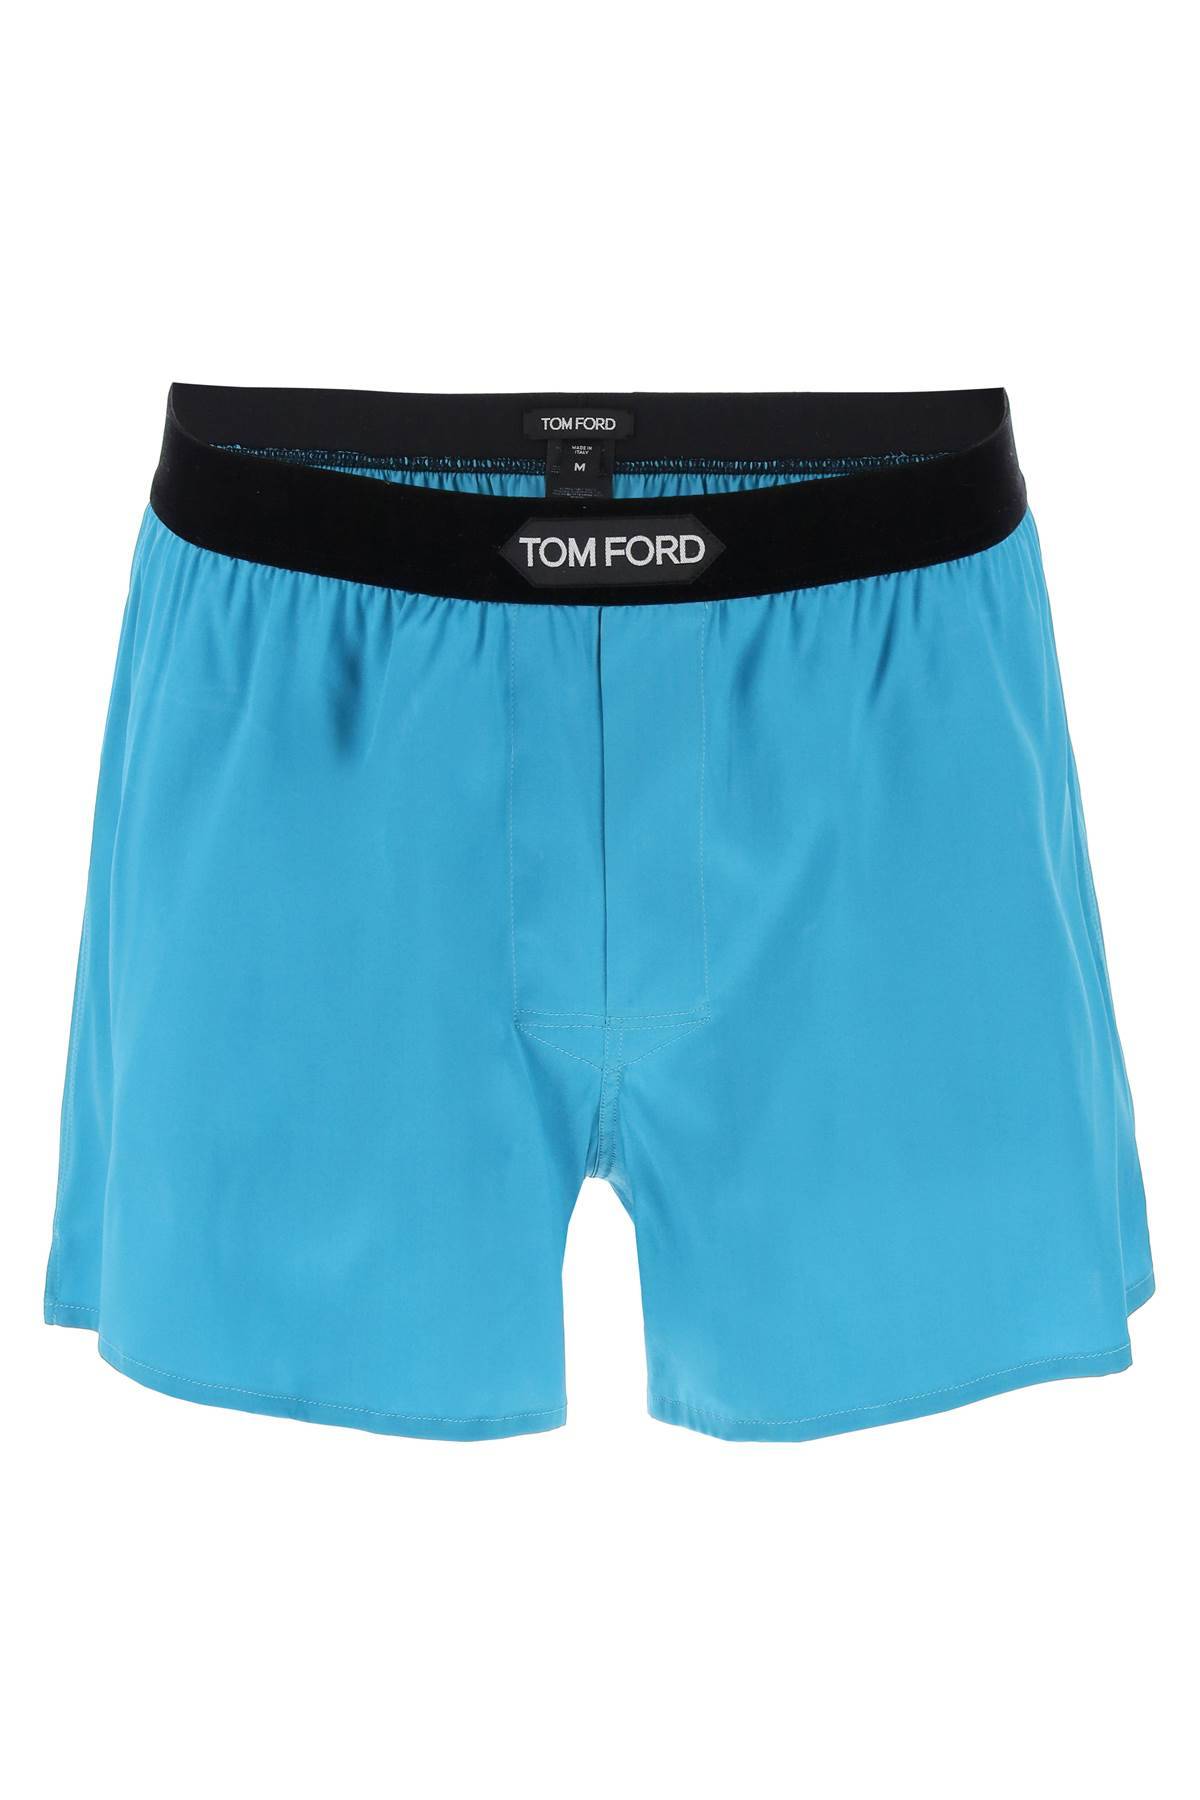 Tom Ford TOM FORD silk boxer set